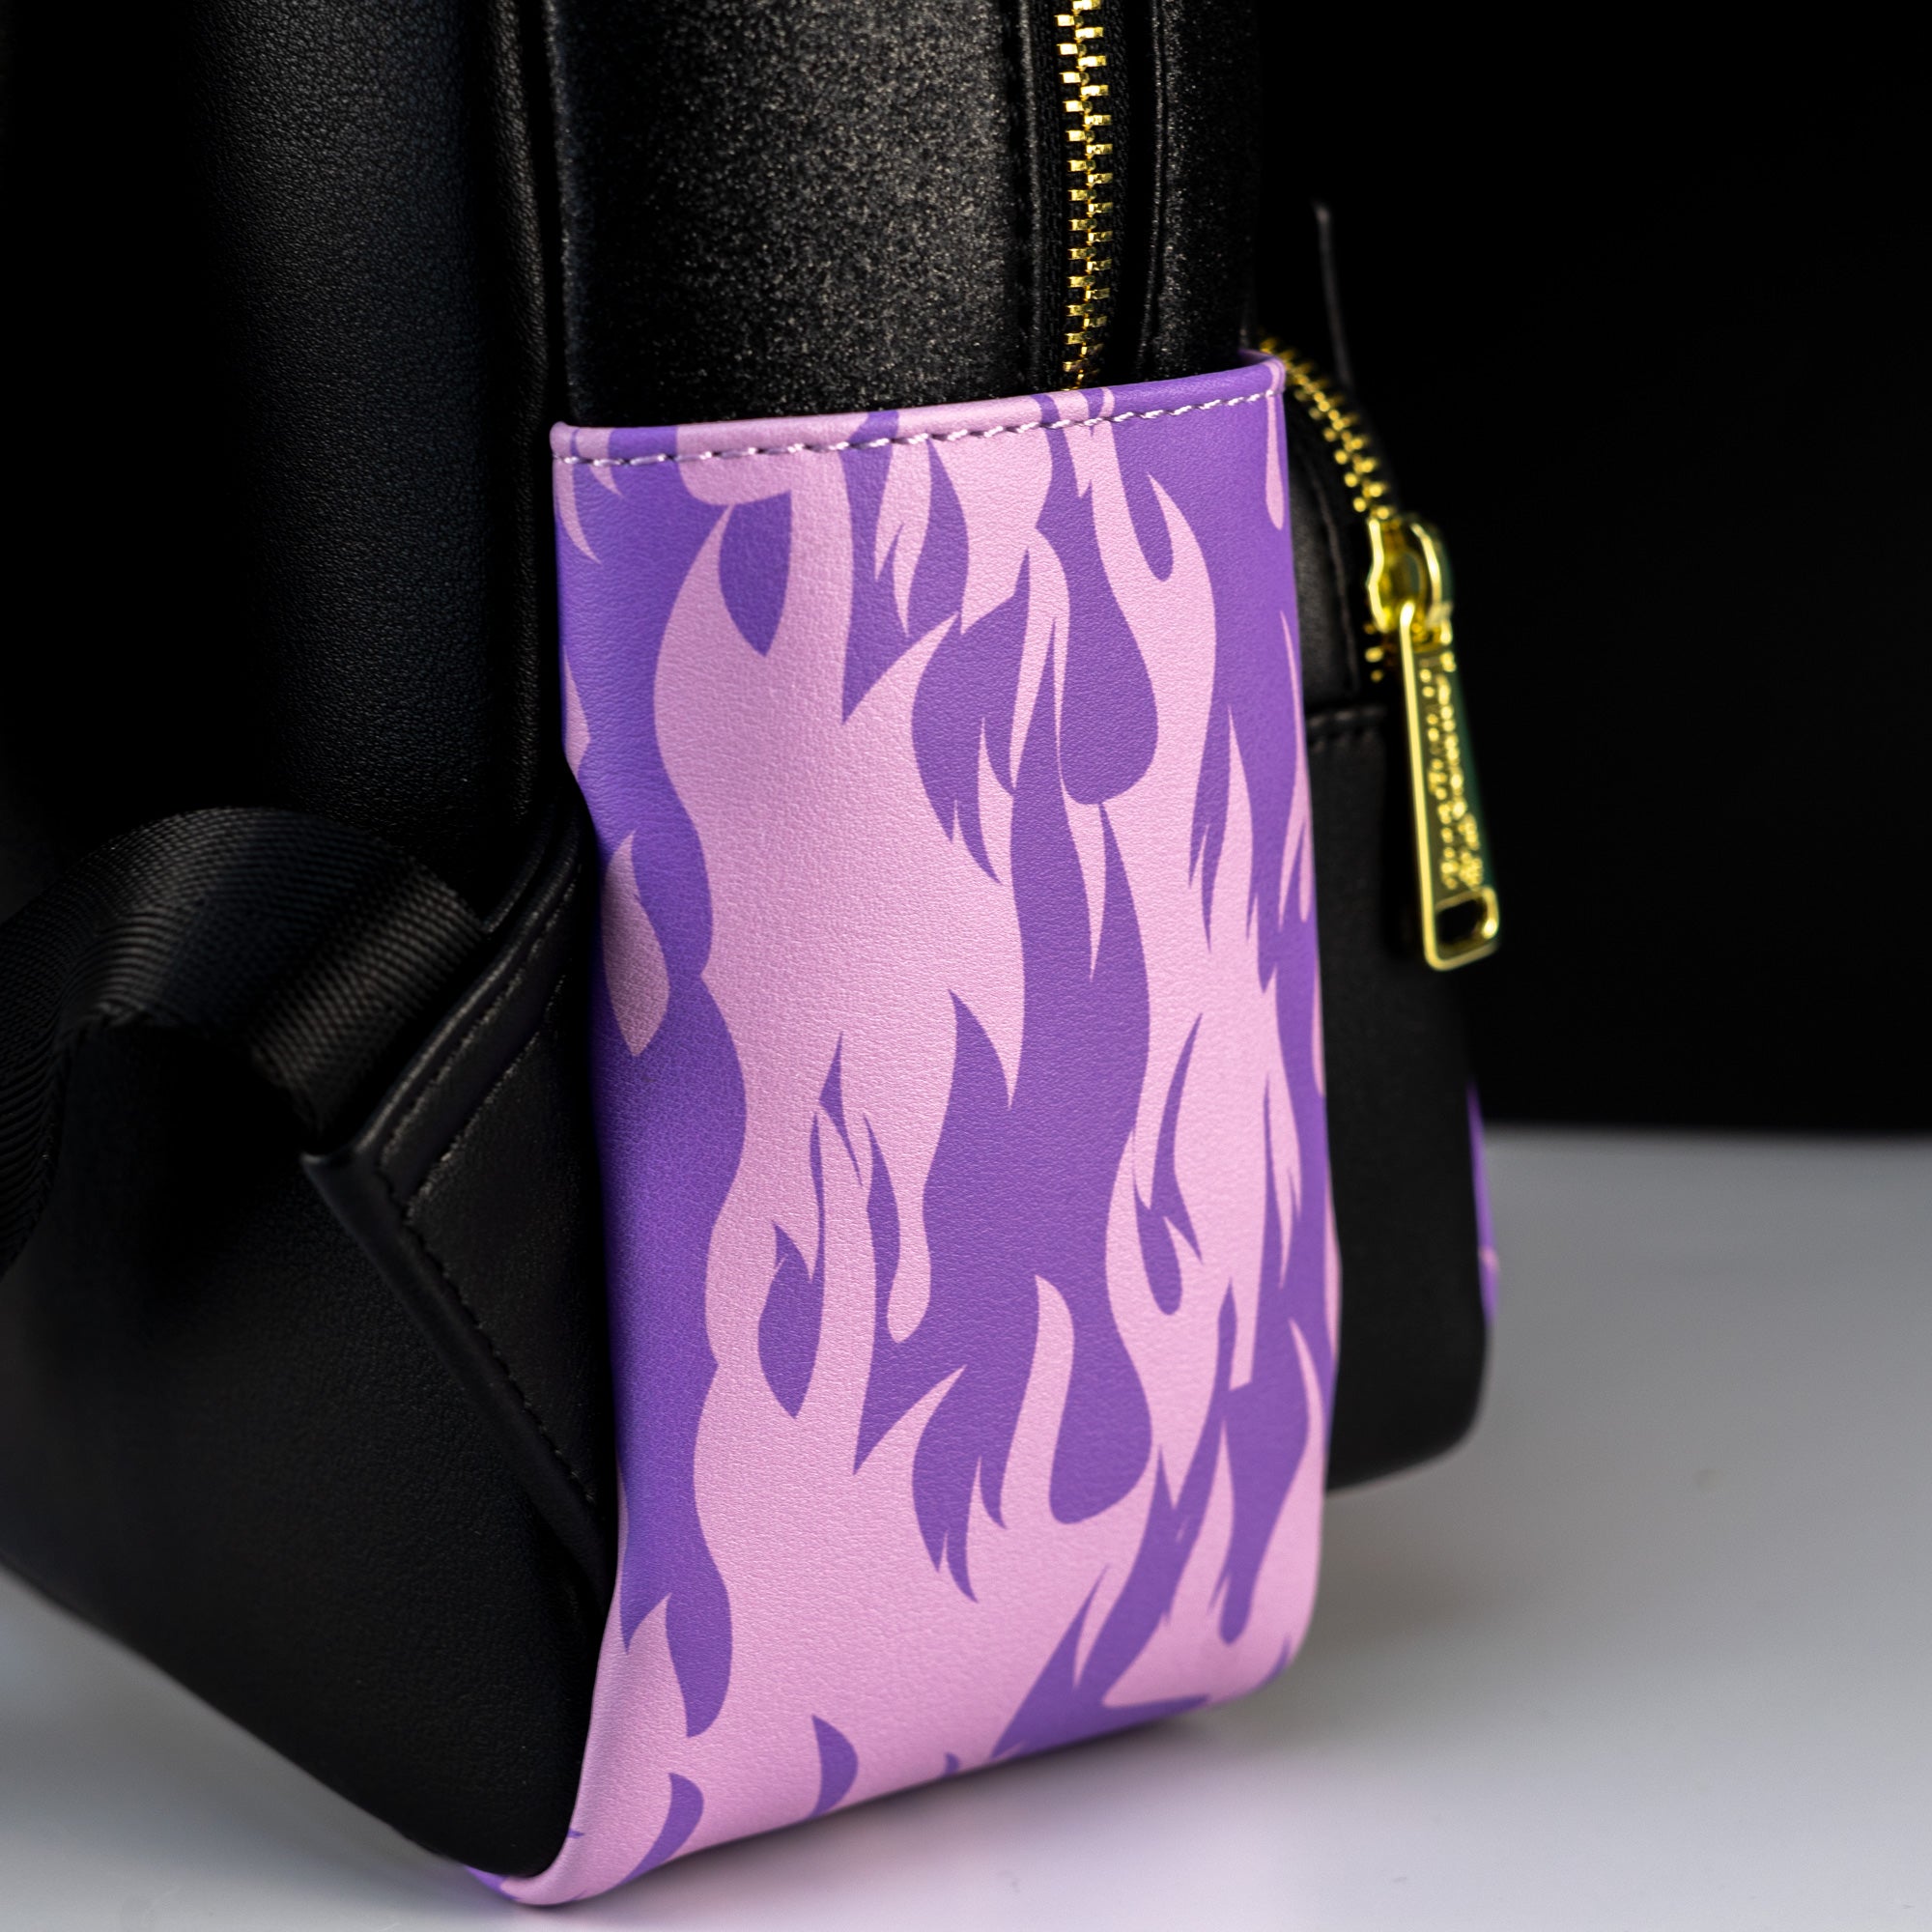 Loungefly x Disney Villains Purple Flame Mini Backpack